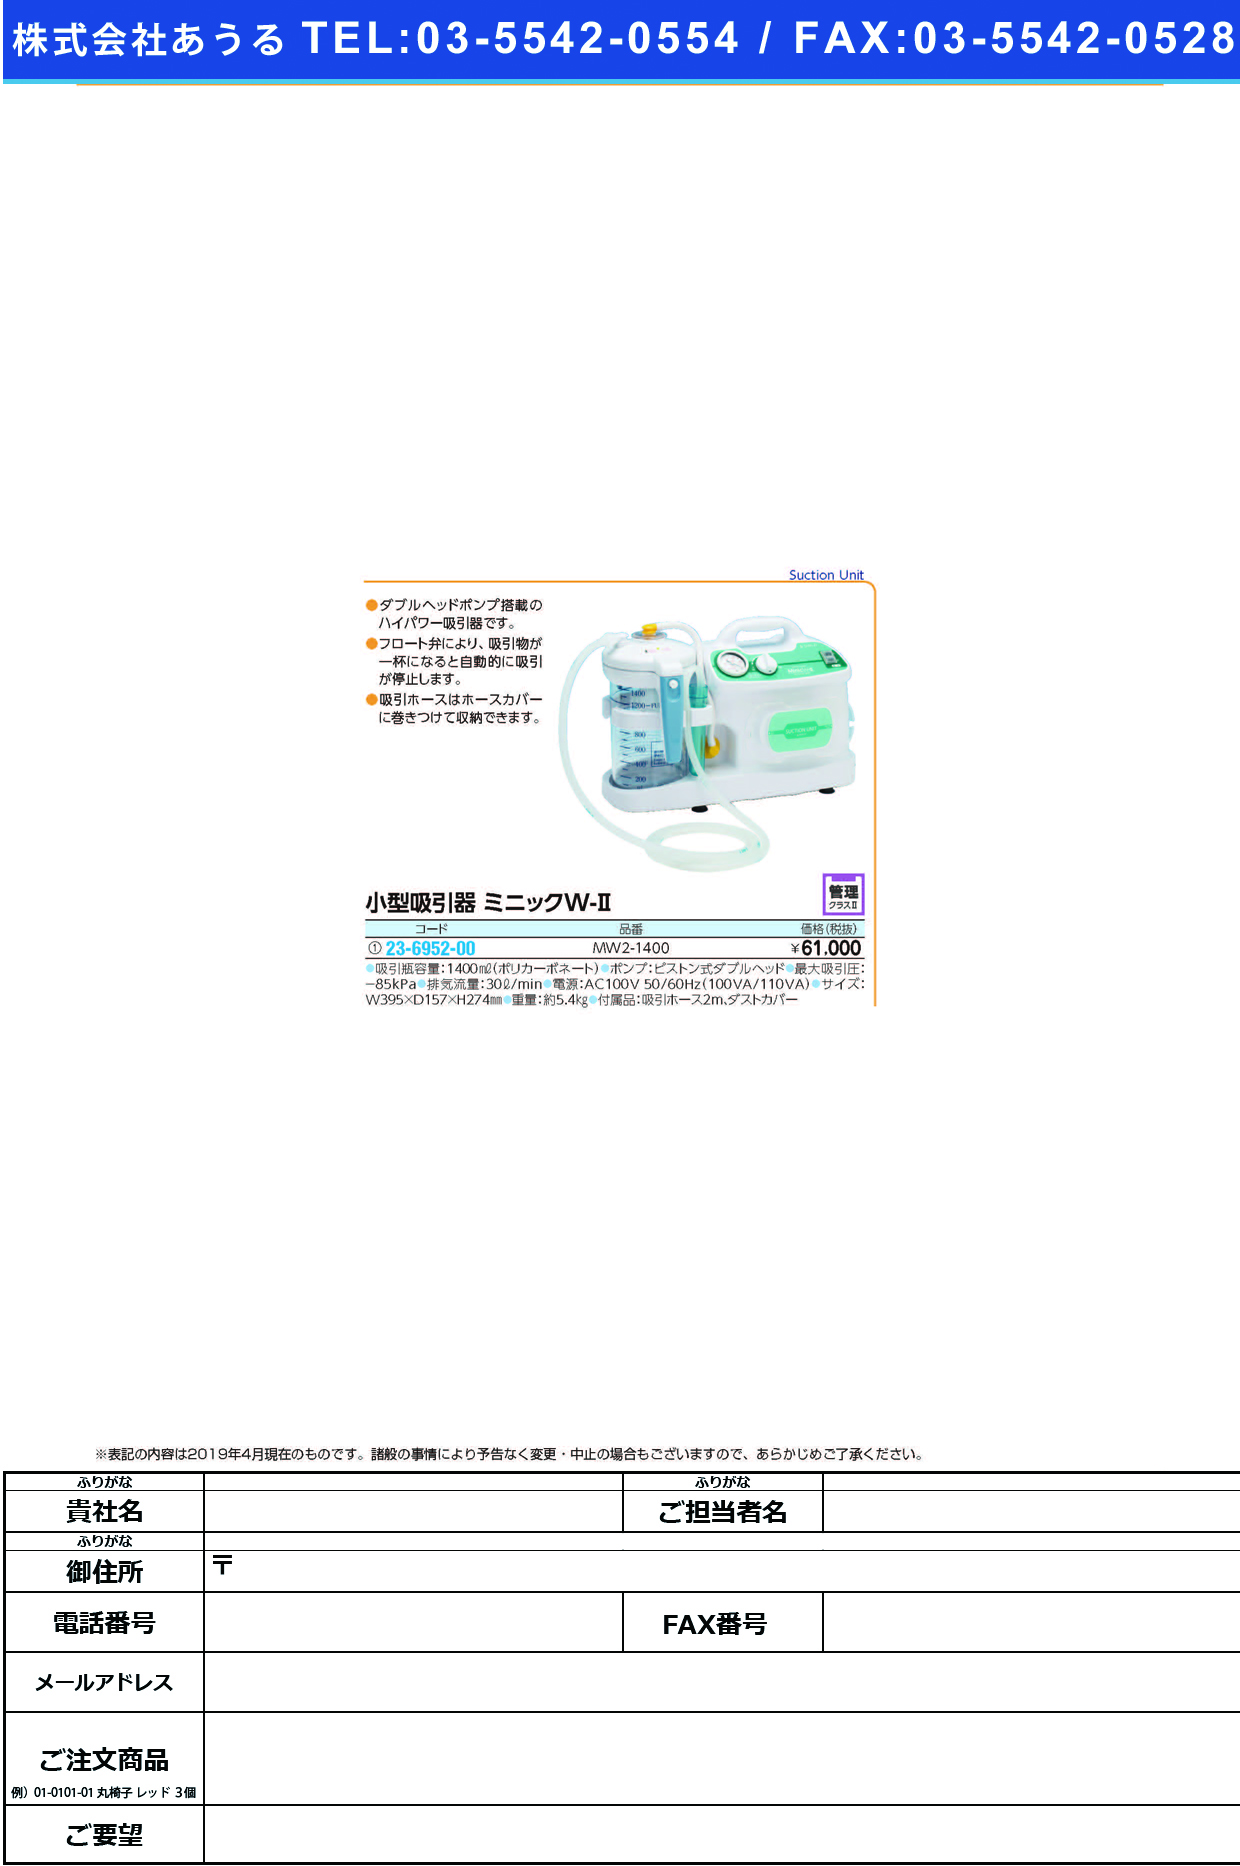 (23-6952-00)小型吸引器ミニックＷ－Ⅱ MW2-1400 ｺｶﾞﾀｷｭｳｲﾝｷﾐﾆｯｸW-2(新鋭工業)【1台単位】【2019年カタログ商品】